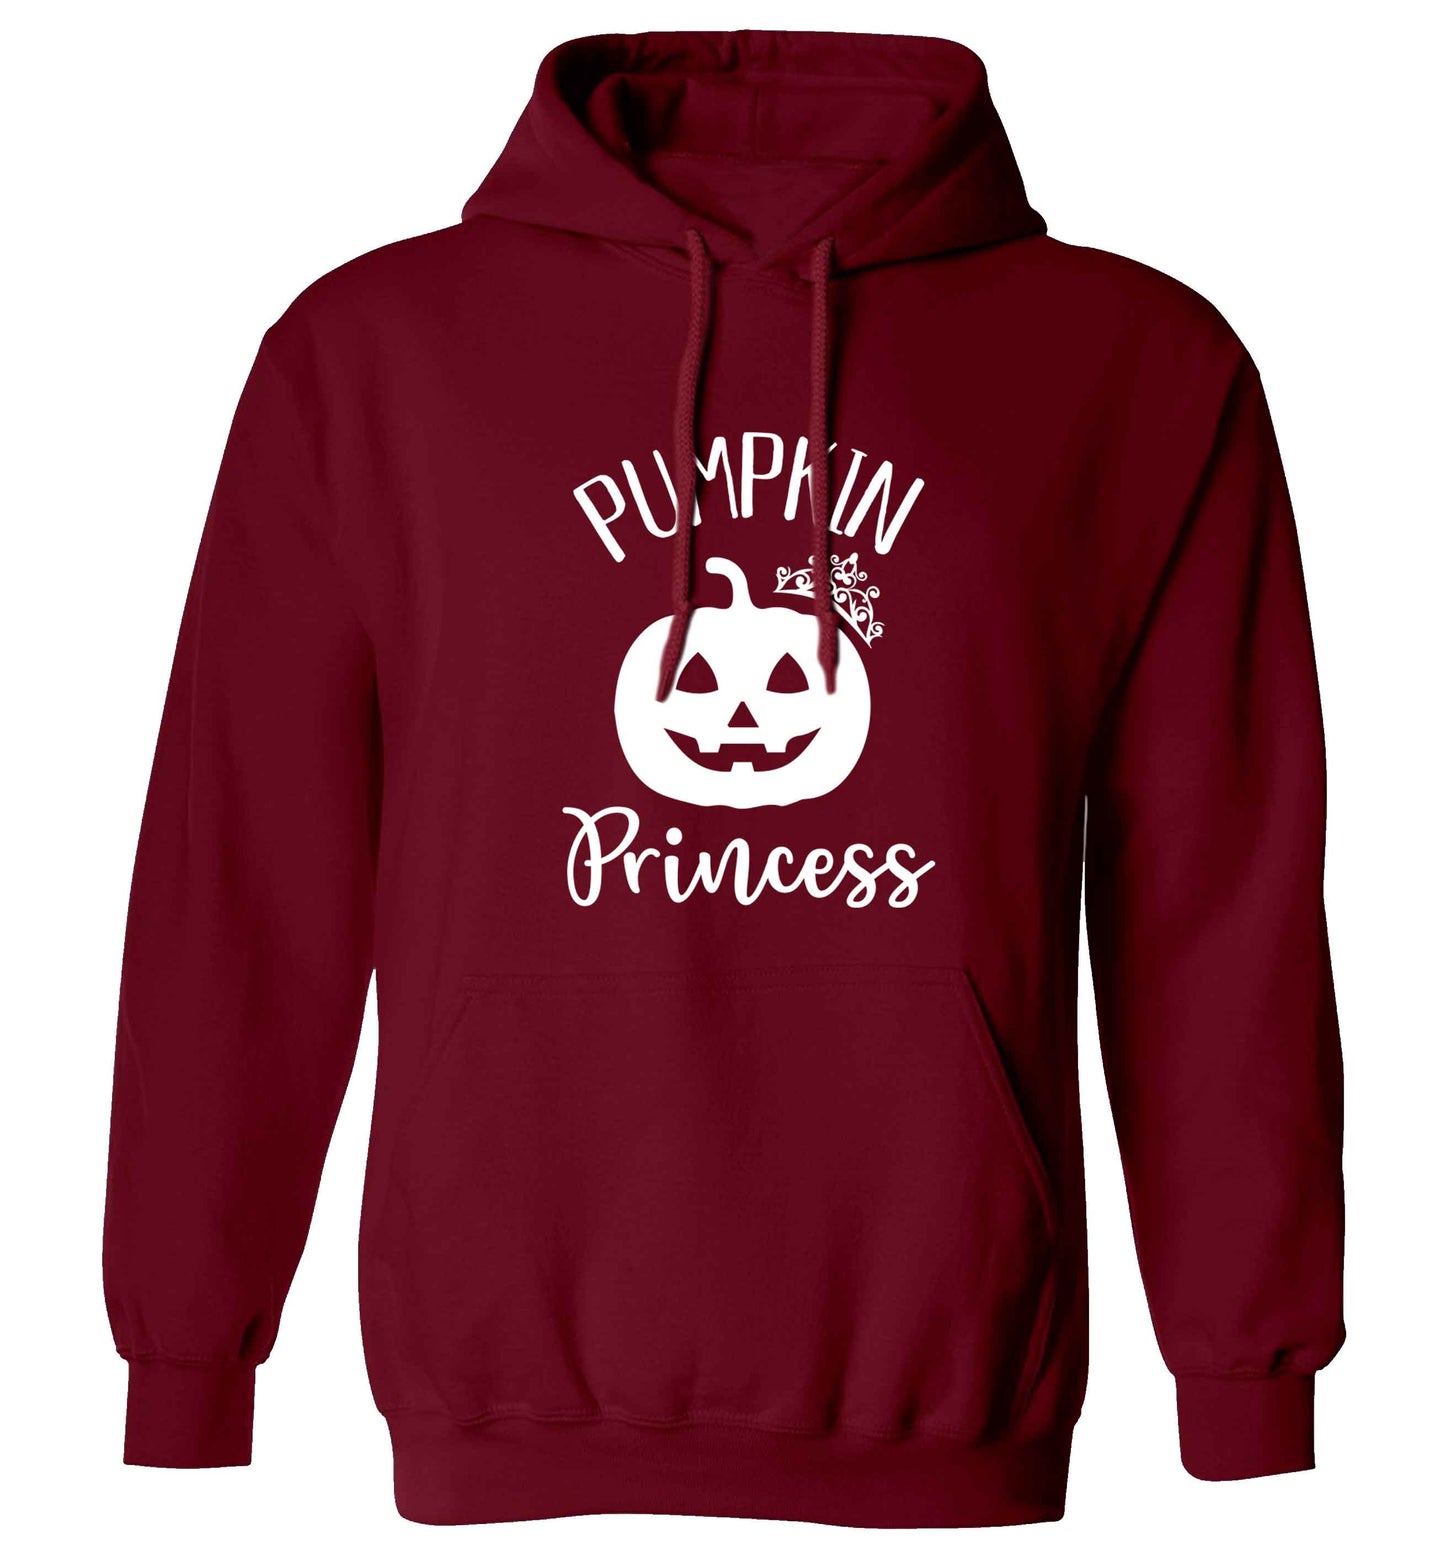 Happiness Pumpkin Spice adults unisex maroon hoodie 2XL